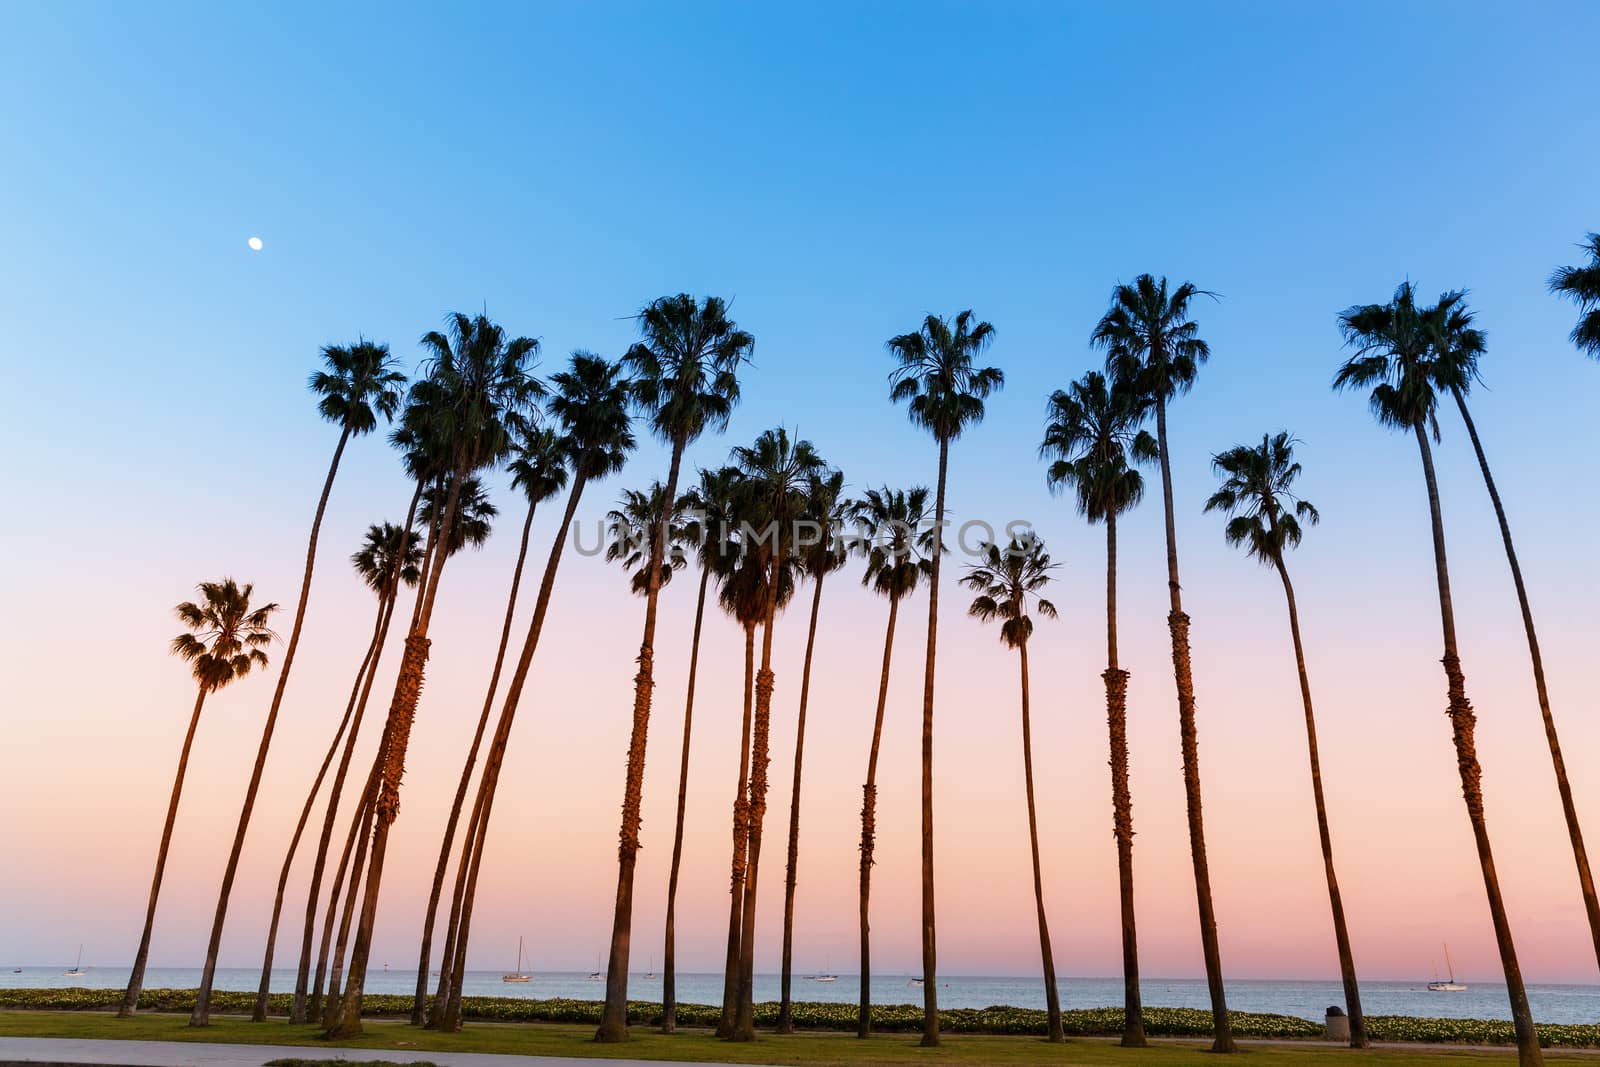 California sunset Palm tree rows in Santa Barbara US